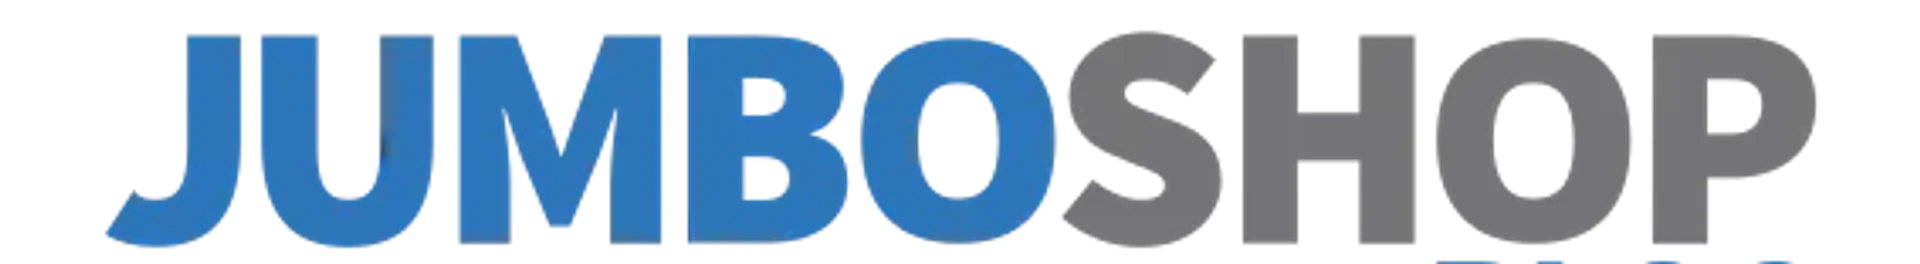 JUMBO SHOP logo die aktuell Flugblatt